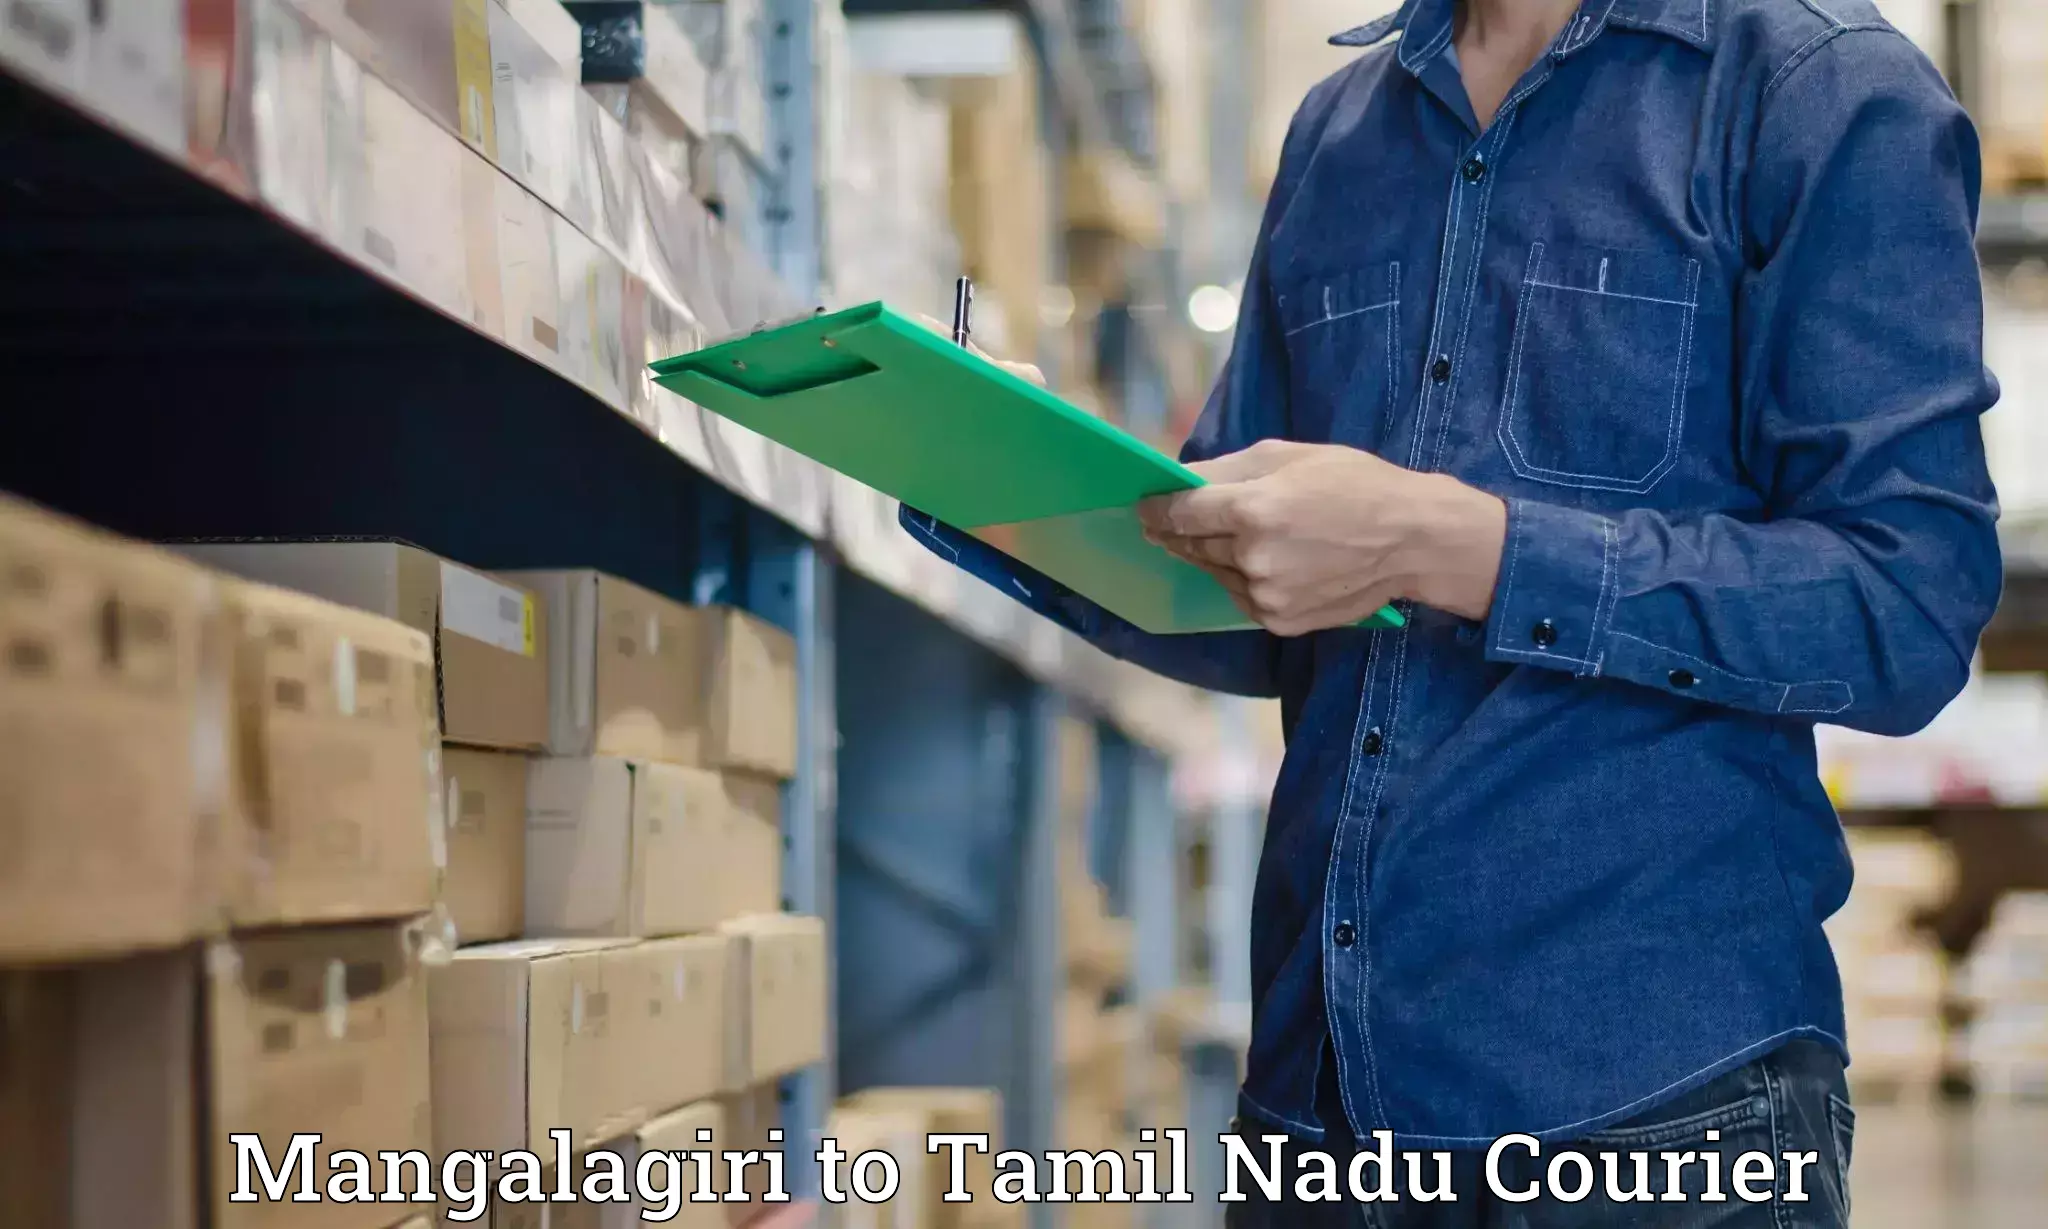 Courier service efficiency Mangalagiri to Tamil Nadu